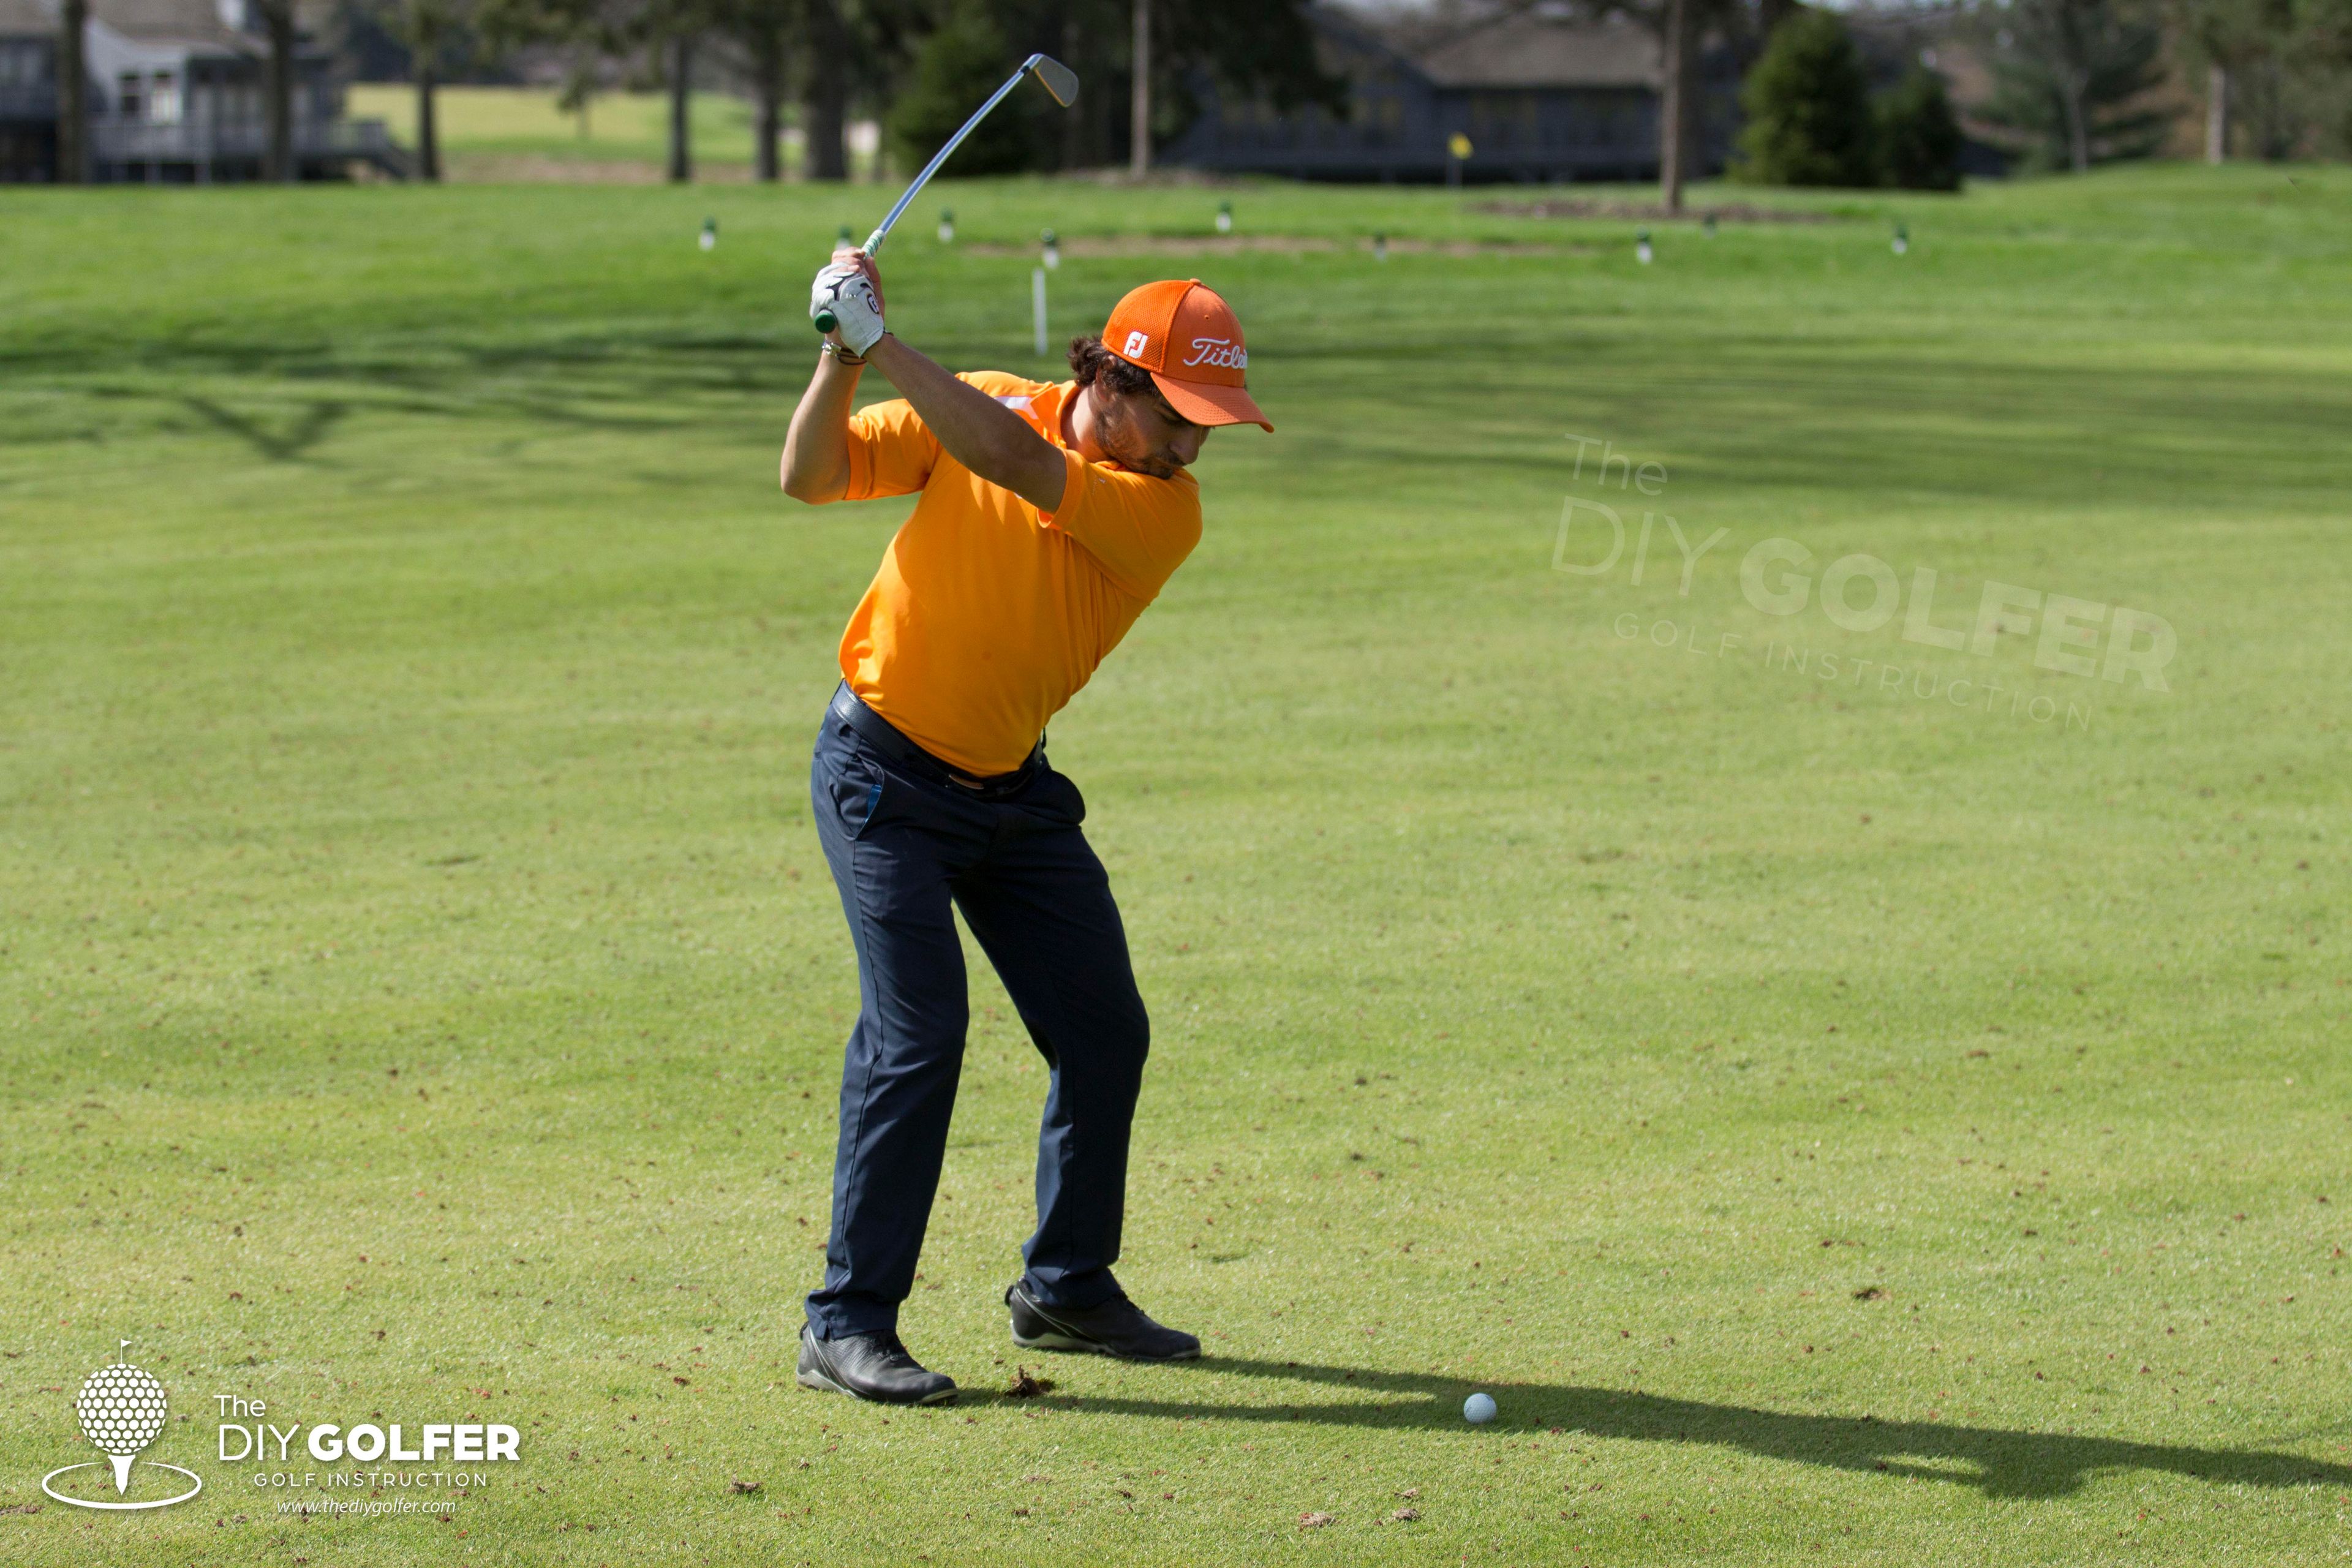 Golf Swing Photo: Orange Shirt Backswing